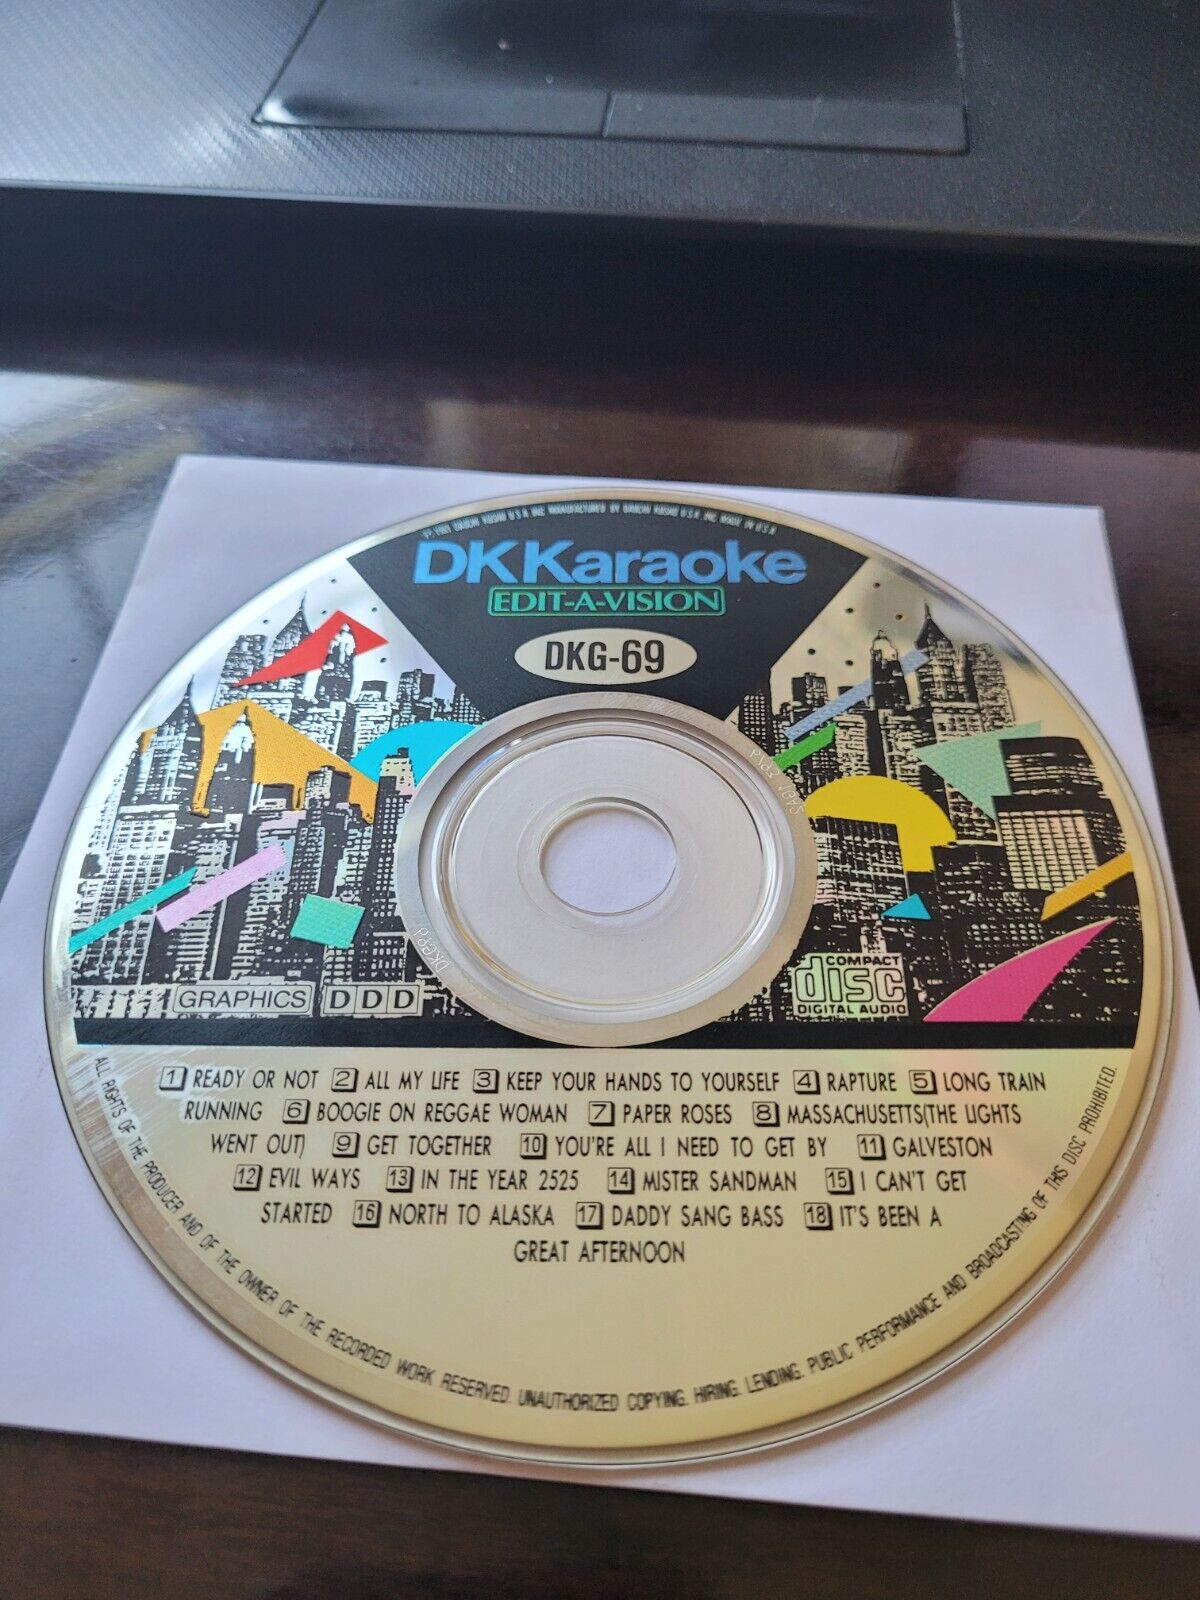 Dk Karaoke Single Disc Dkg-69 Edit-a-vision, Very Rare, Tested